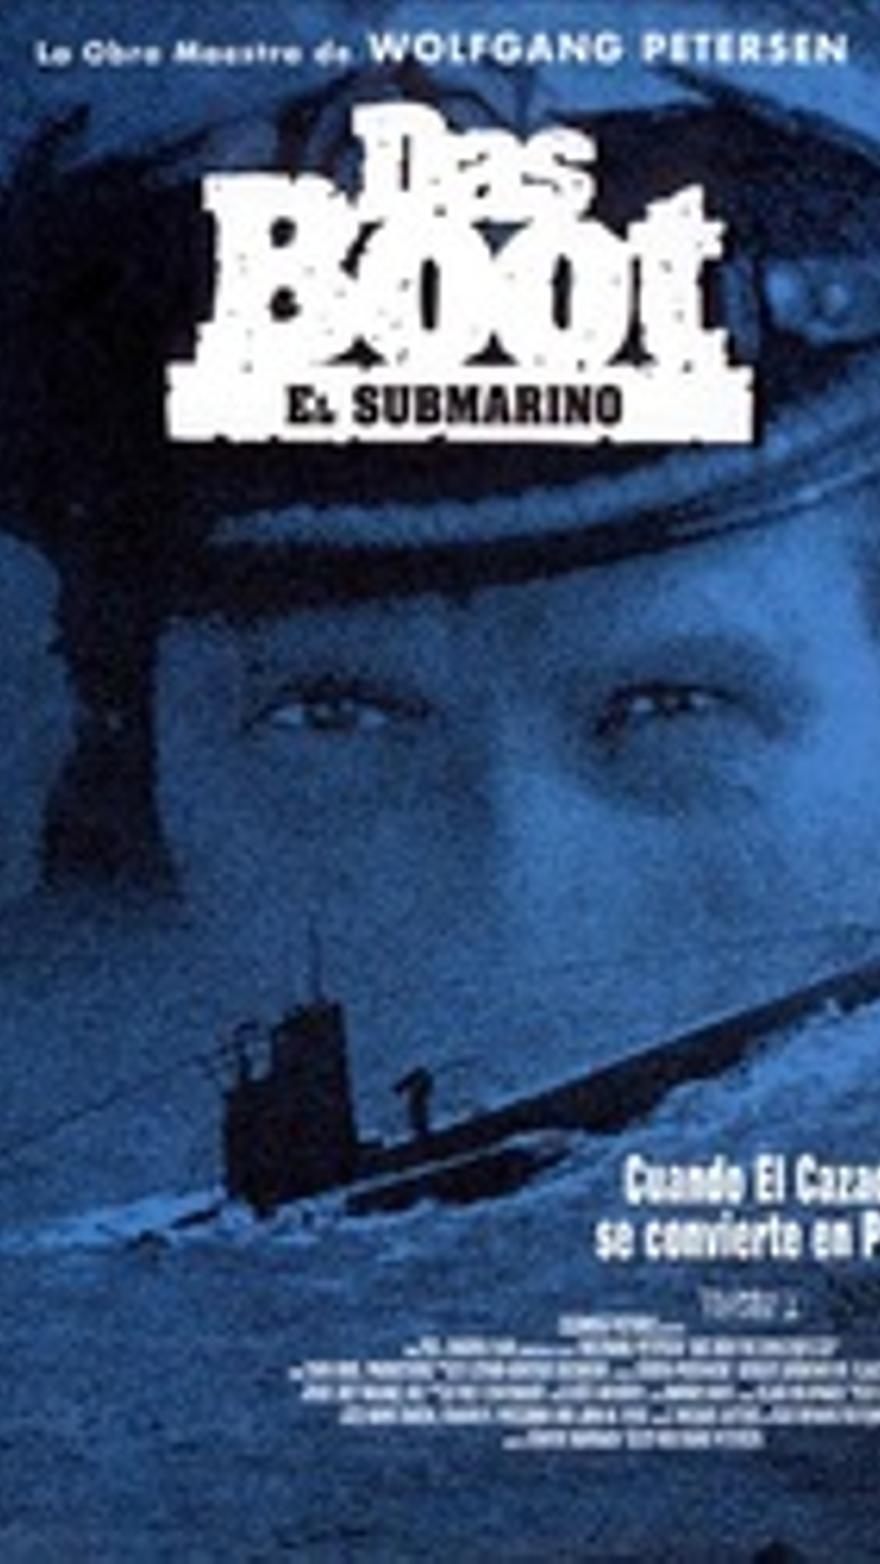 El submarino